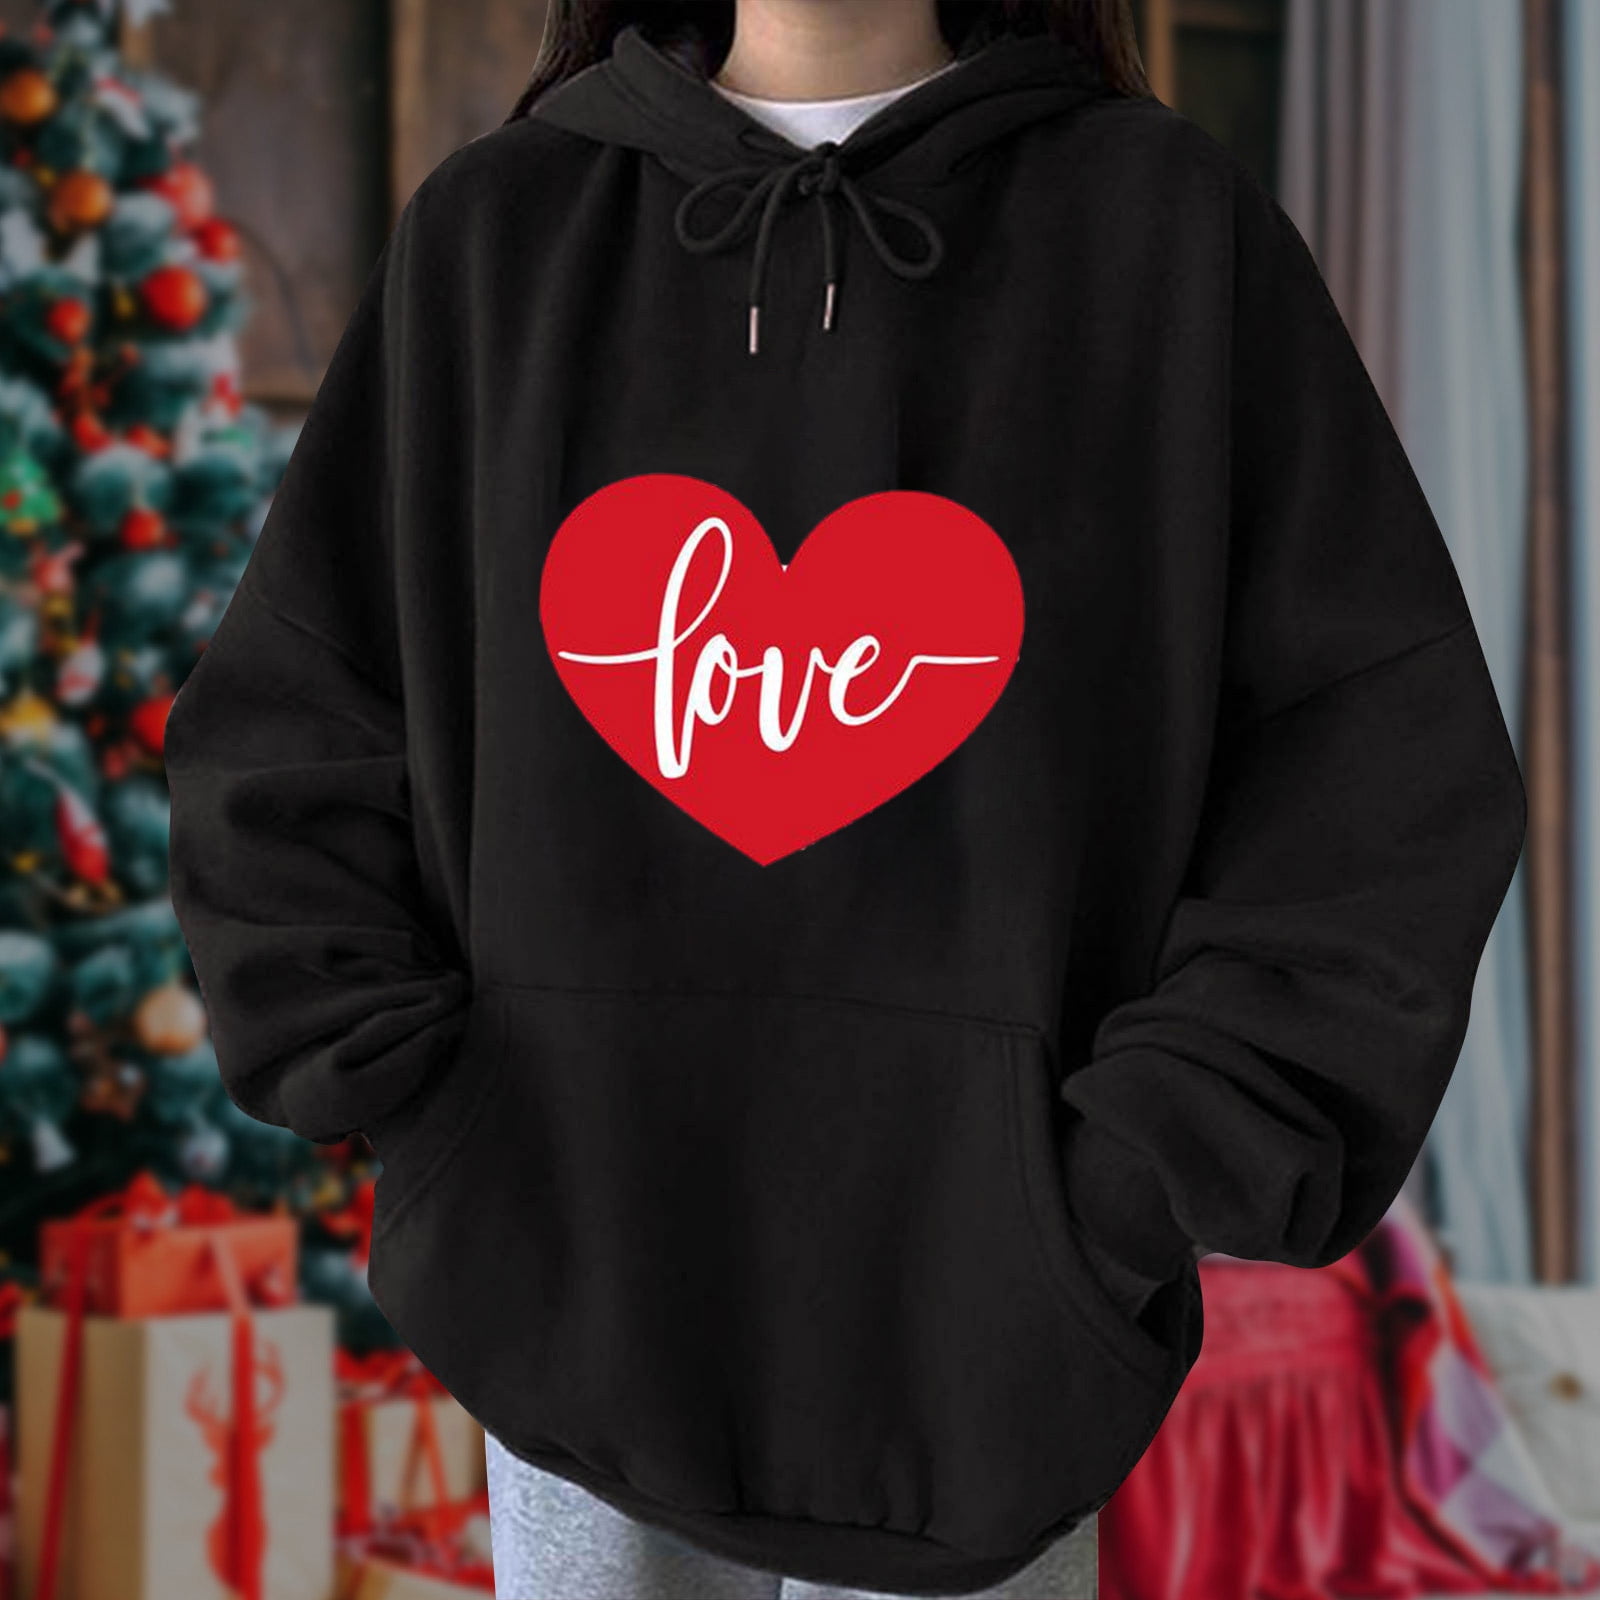 HAPIMO Savings Valentine's Day Sweatshirts for Women Valentine